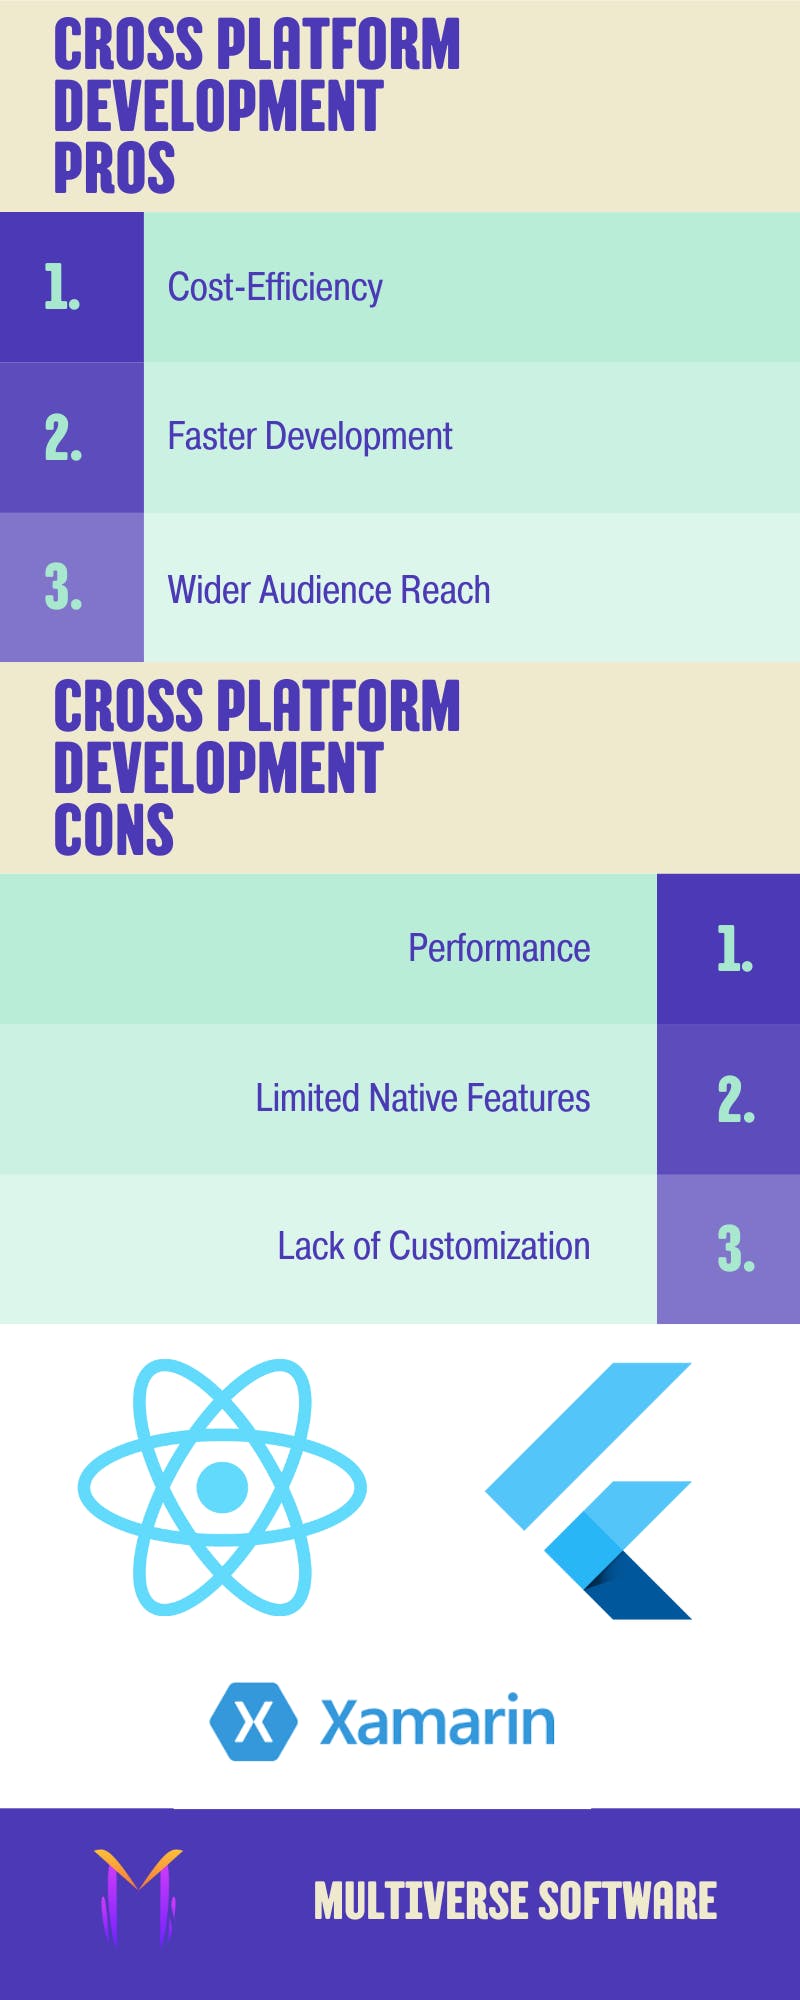 Cross Platform Development- the pros and cons